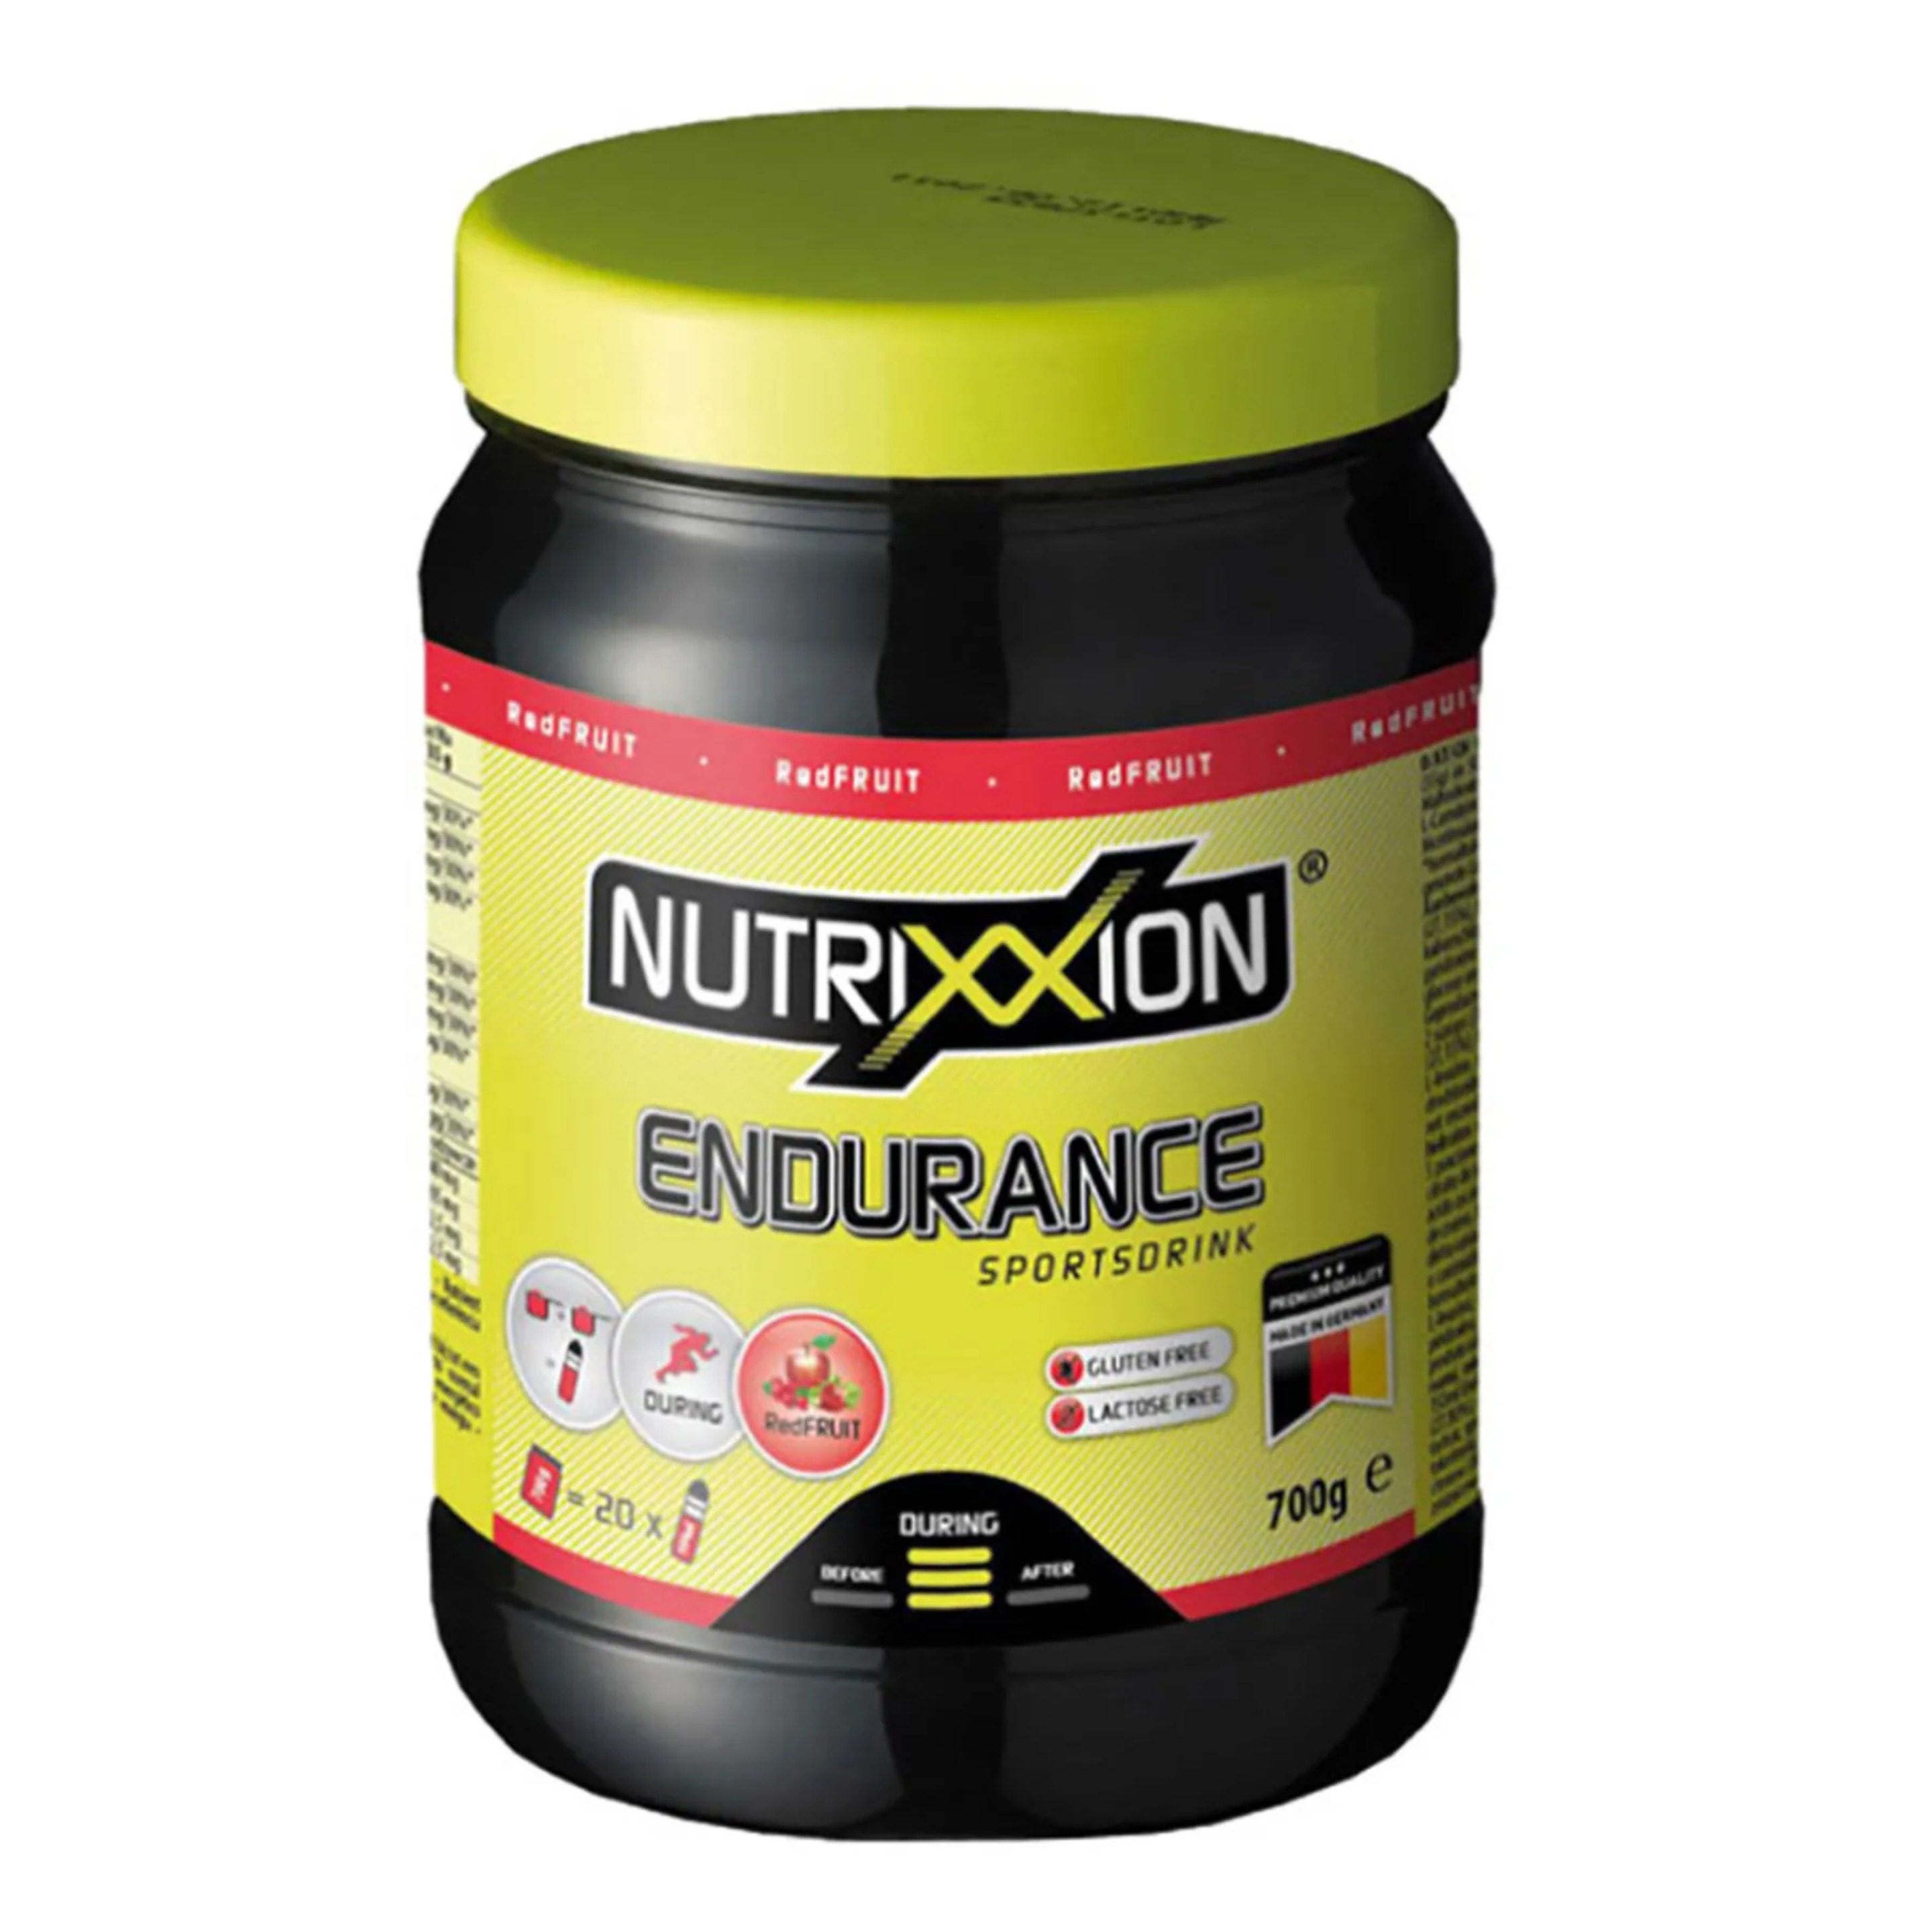 Bebida Energética Endurance Nutrixxion - Energy Drink 700g Endurance Redfruit Nutrixxion | Sport Zone MKP